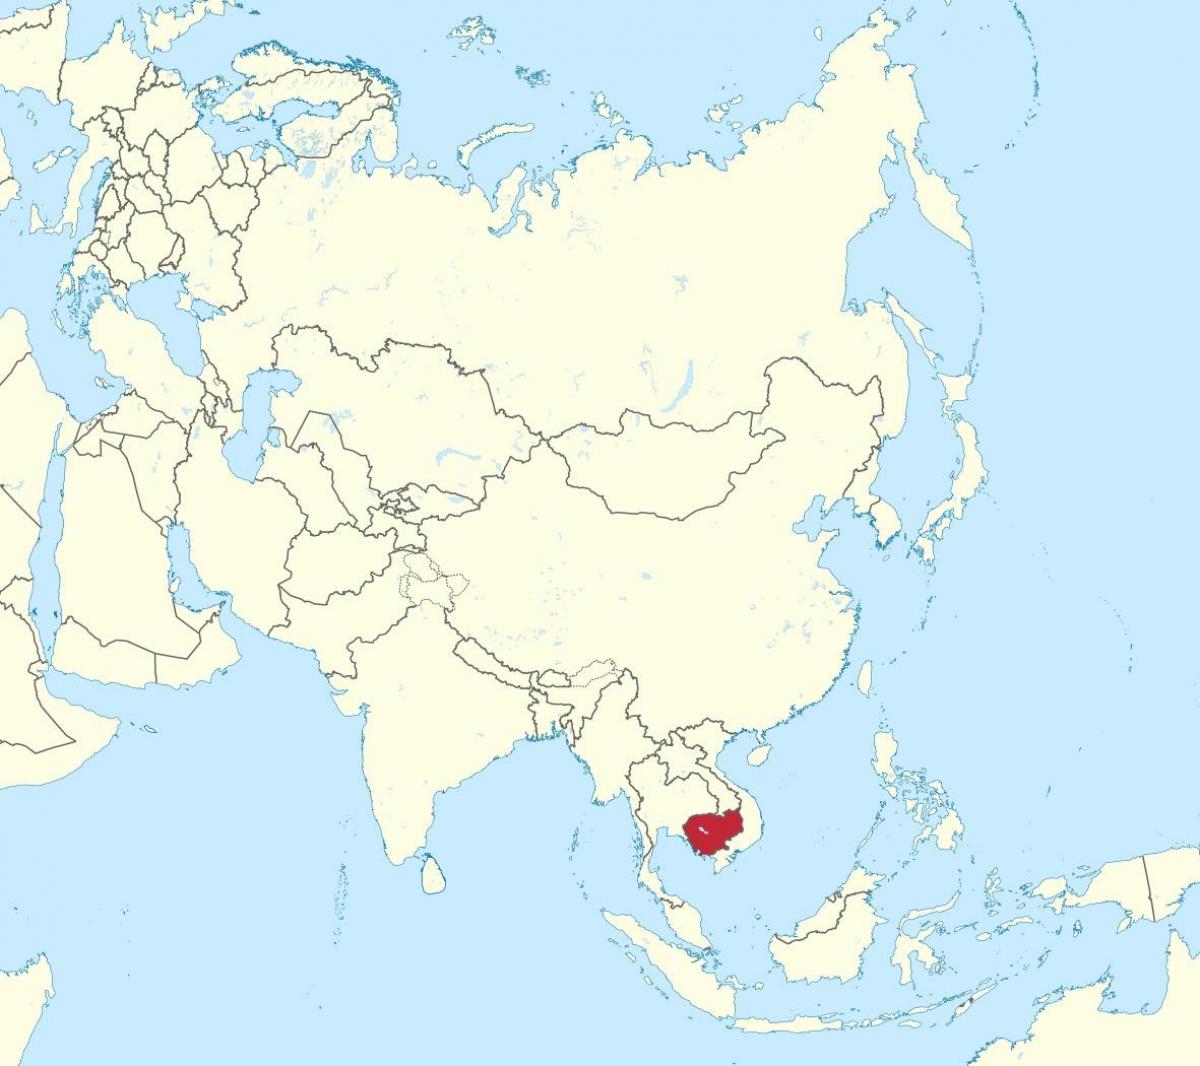 Mappa di Cambogia in asia